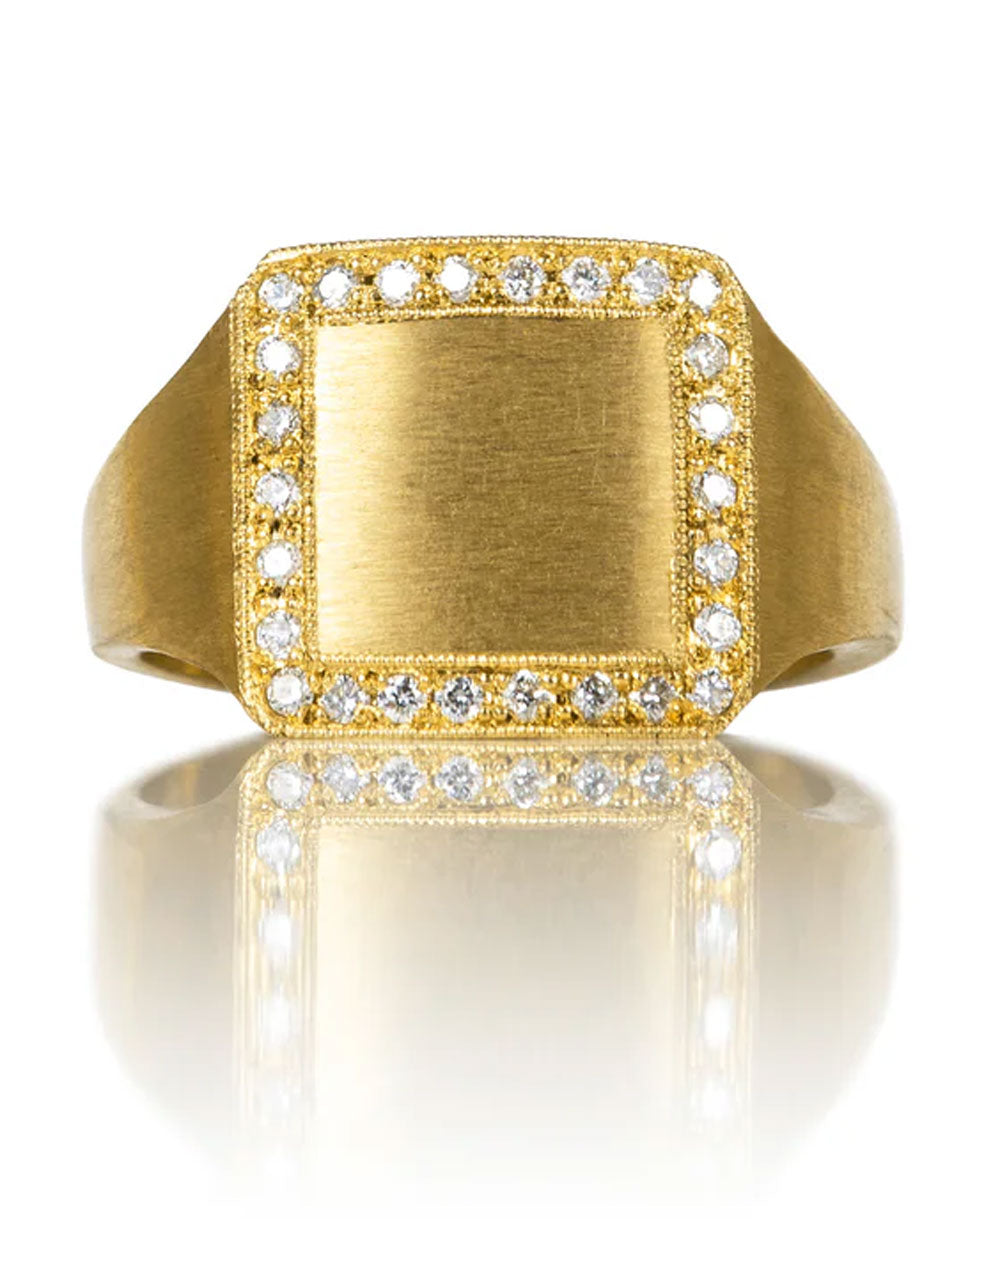 Alana Gold Signet Ring